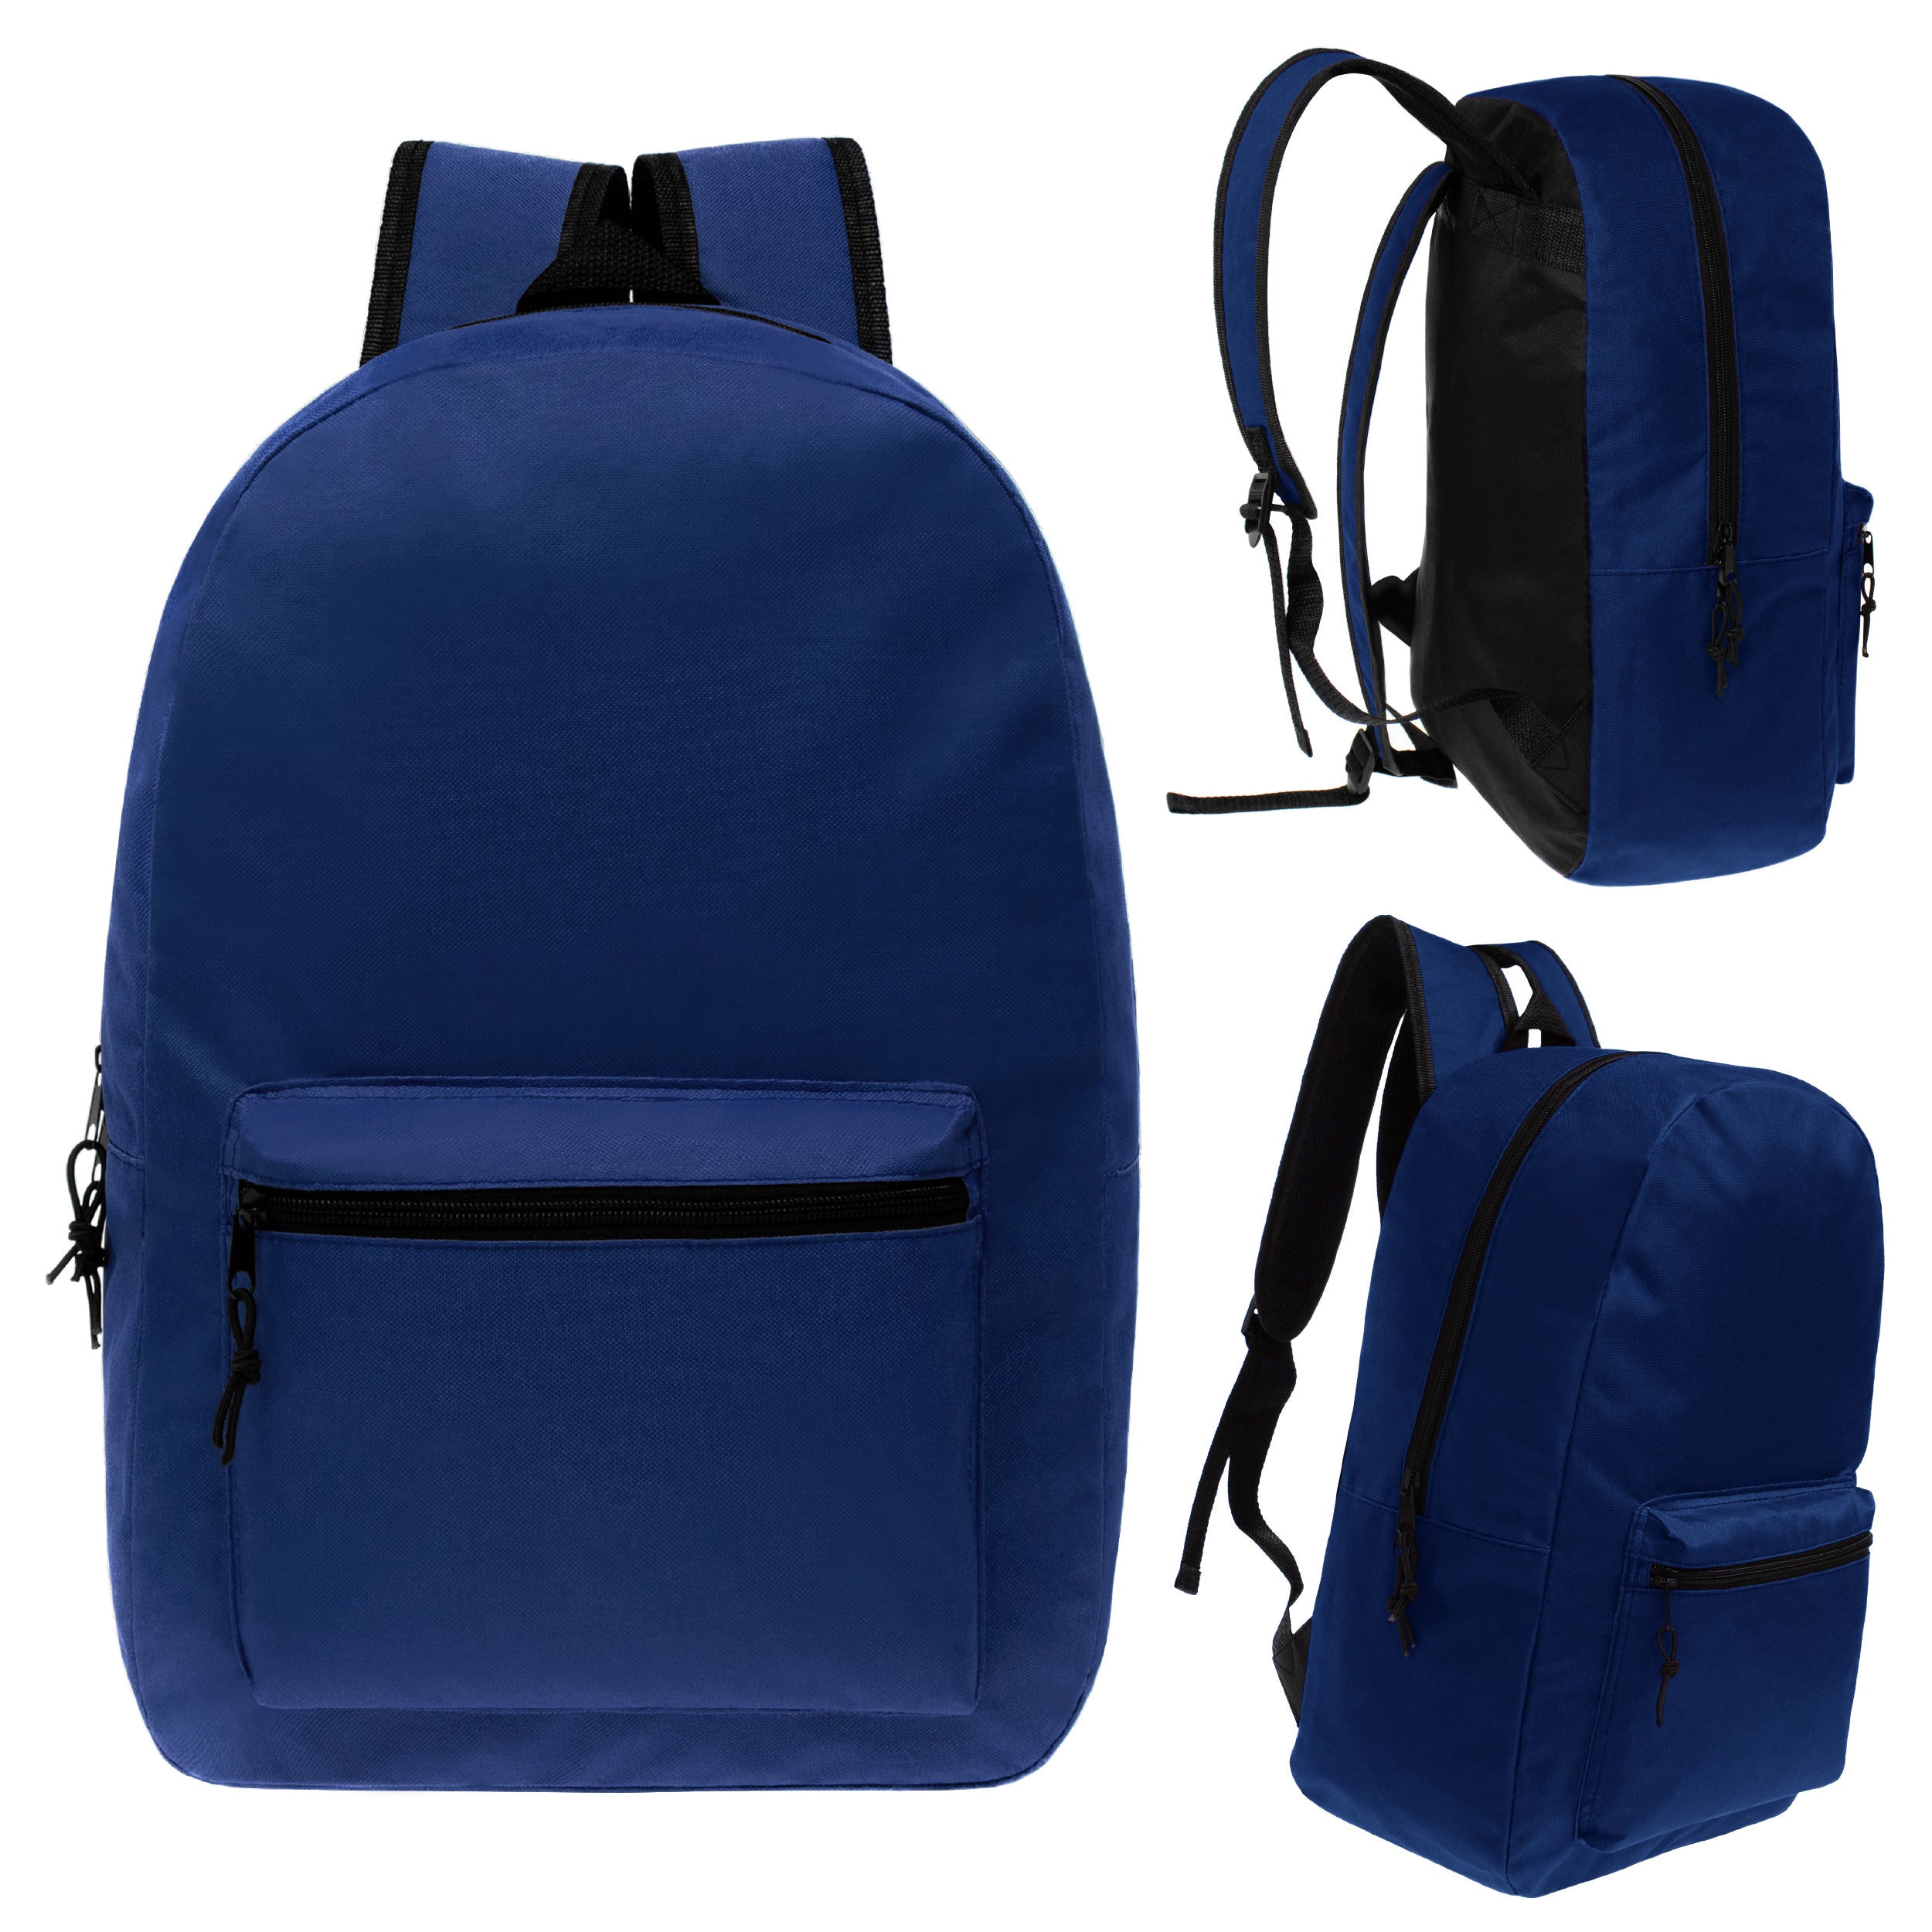 Wholesale Backpacks | Backpacks Supplies School and USA